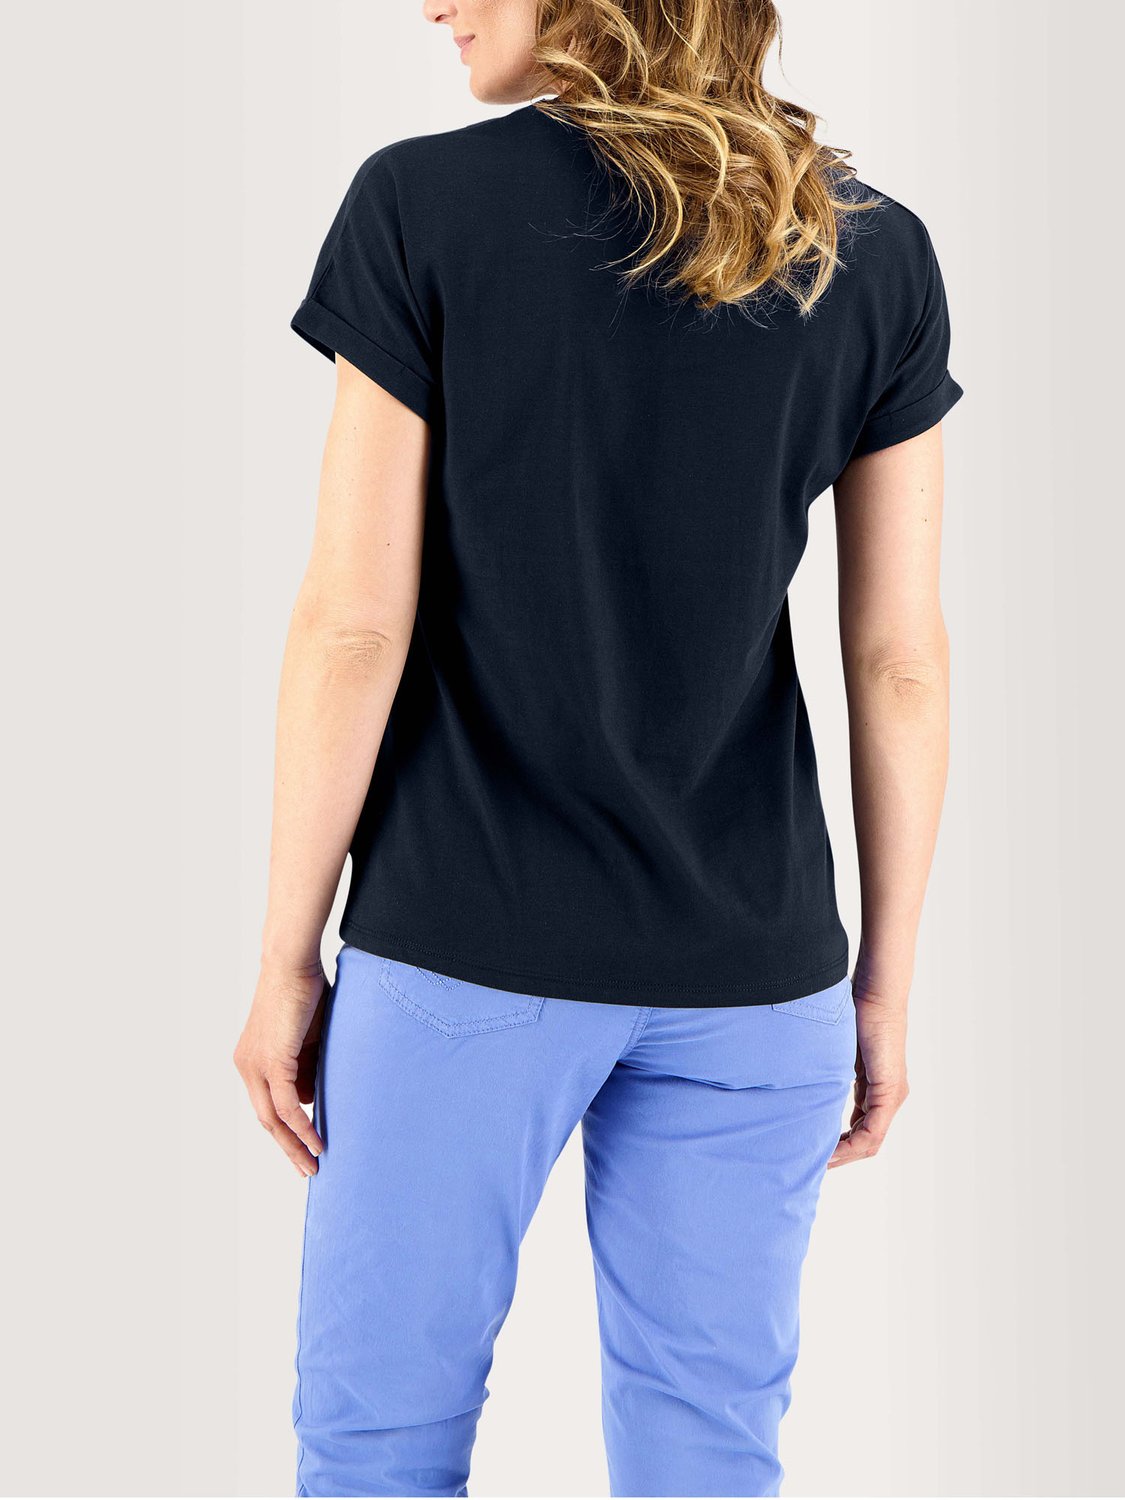 Tee Shirt Femme Coton Biologique Motif Perroquet Marine